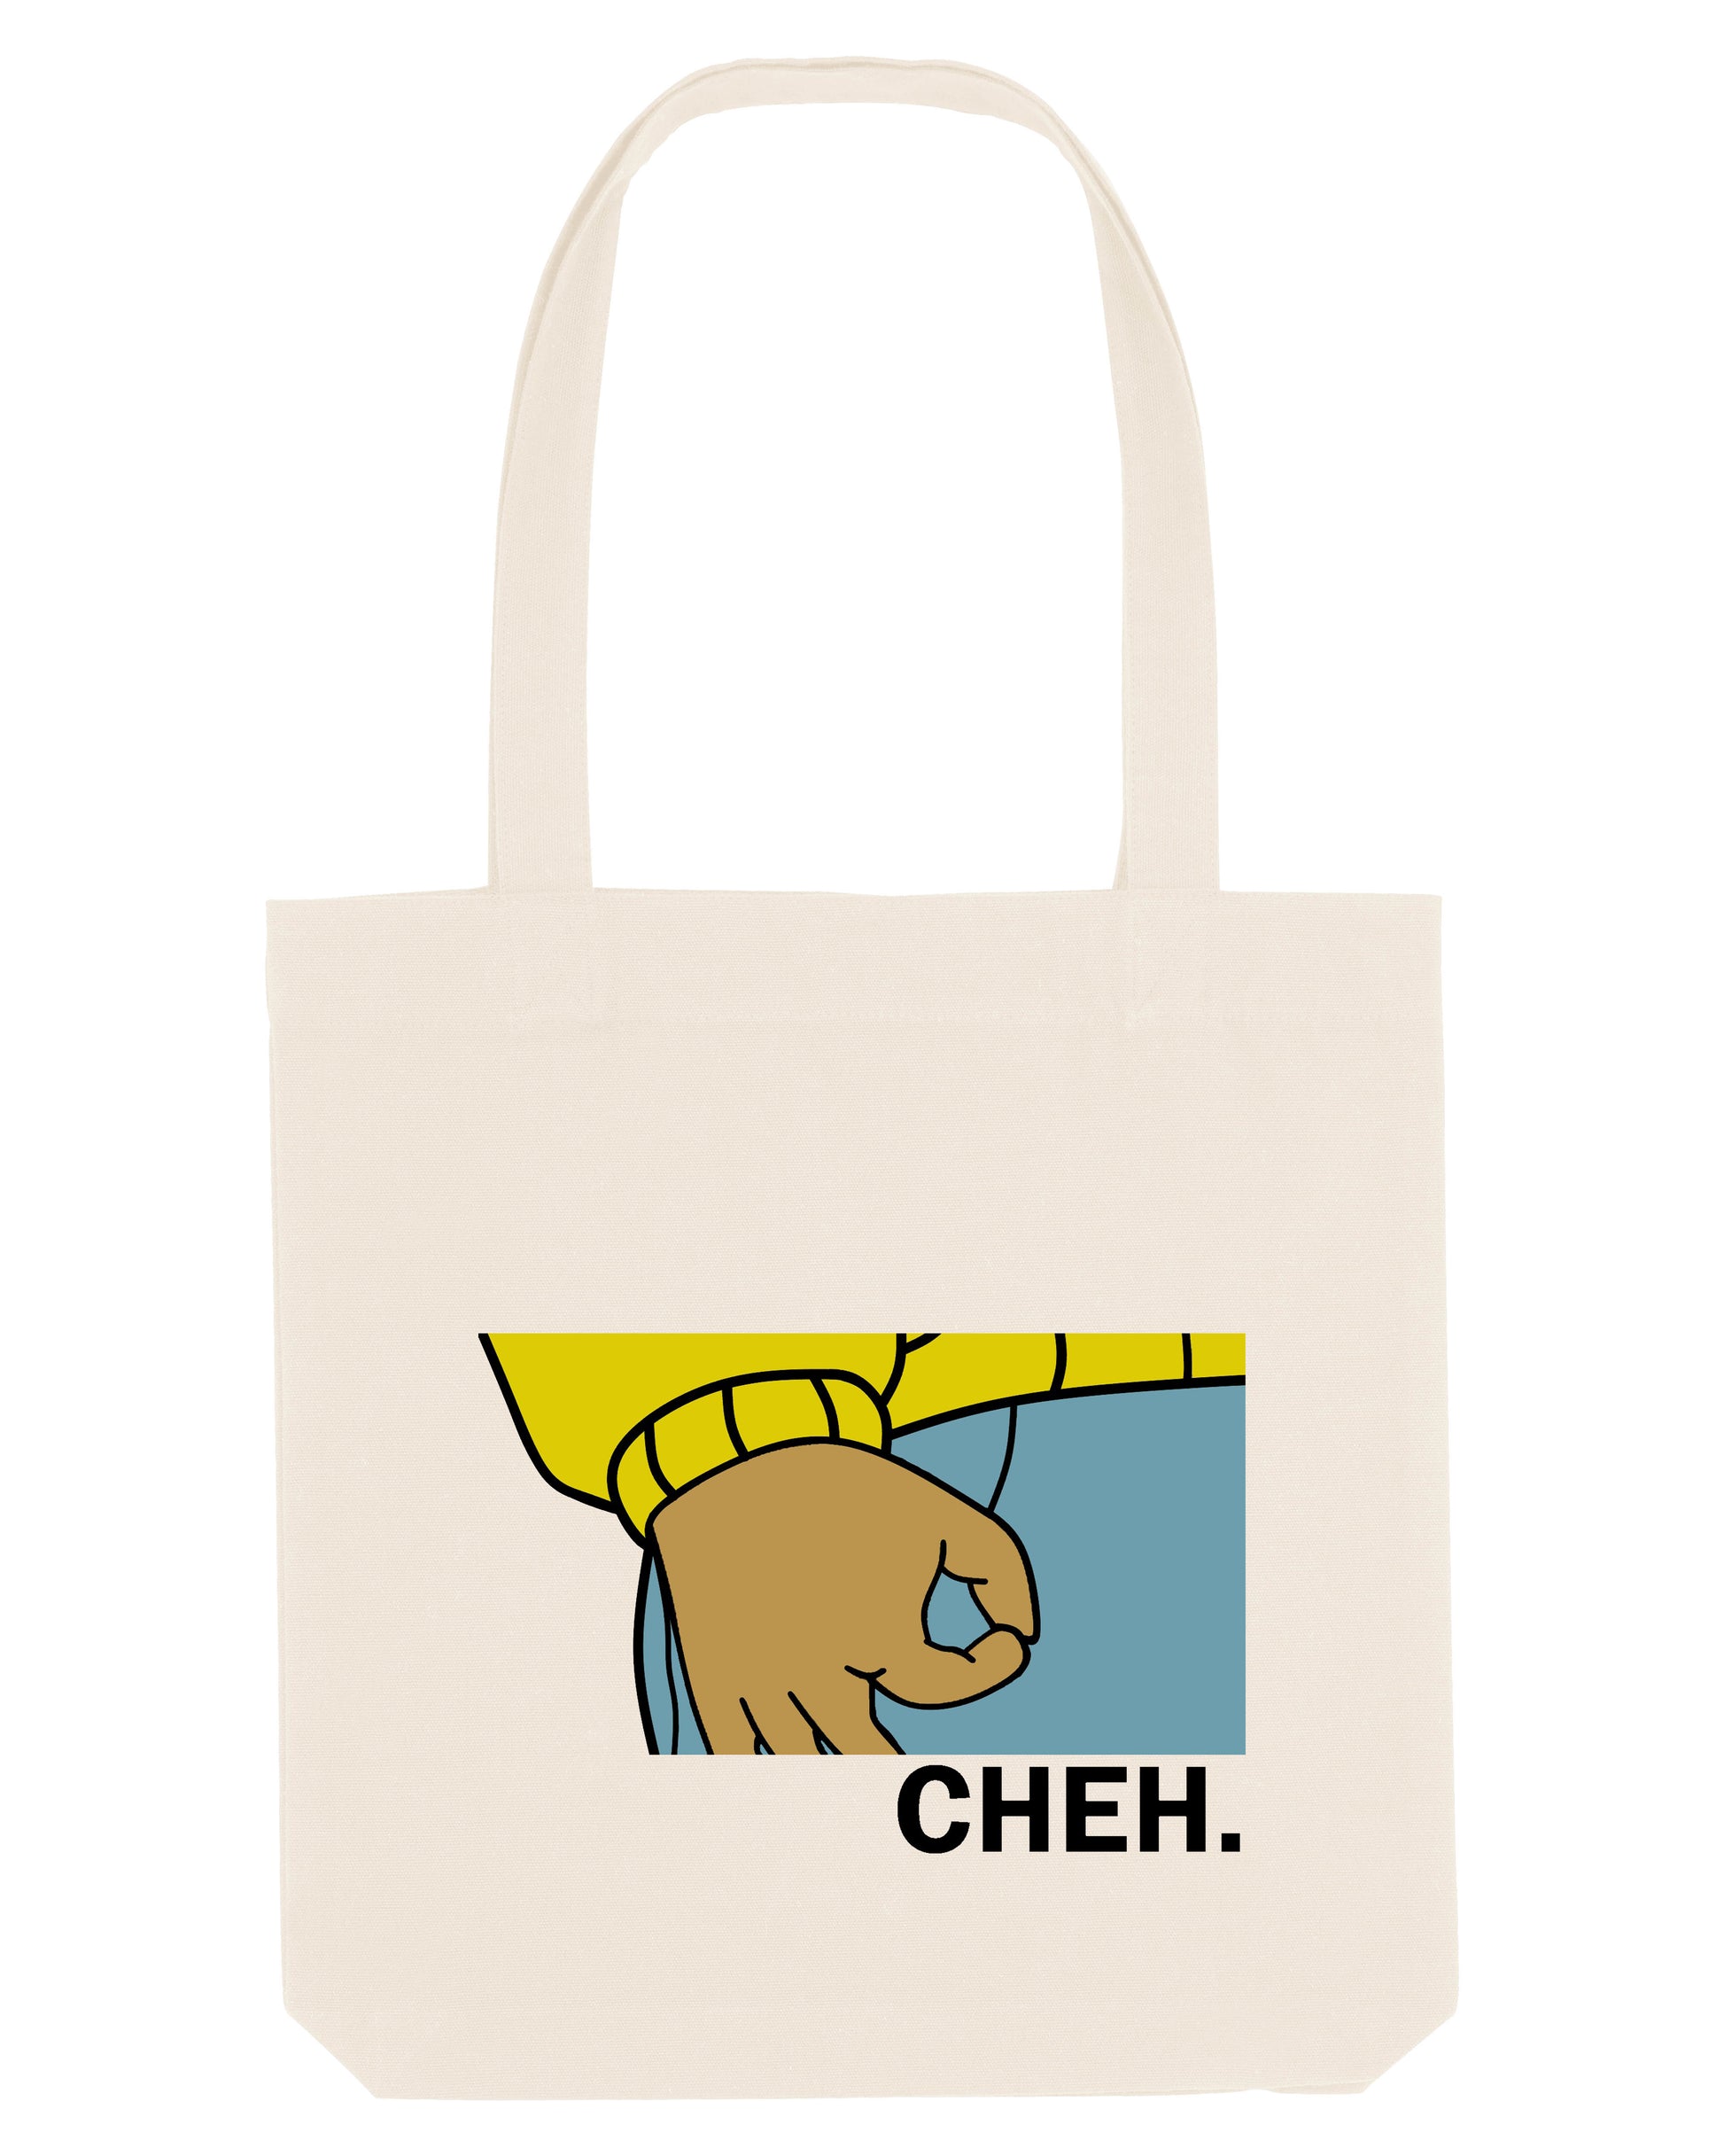 Tote bag "Cheh" - Ghazel Boutique